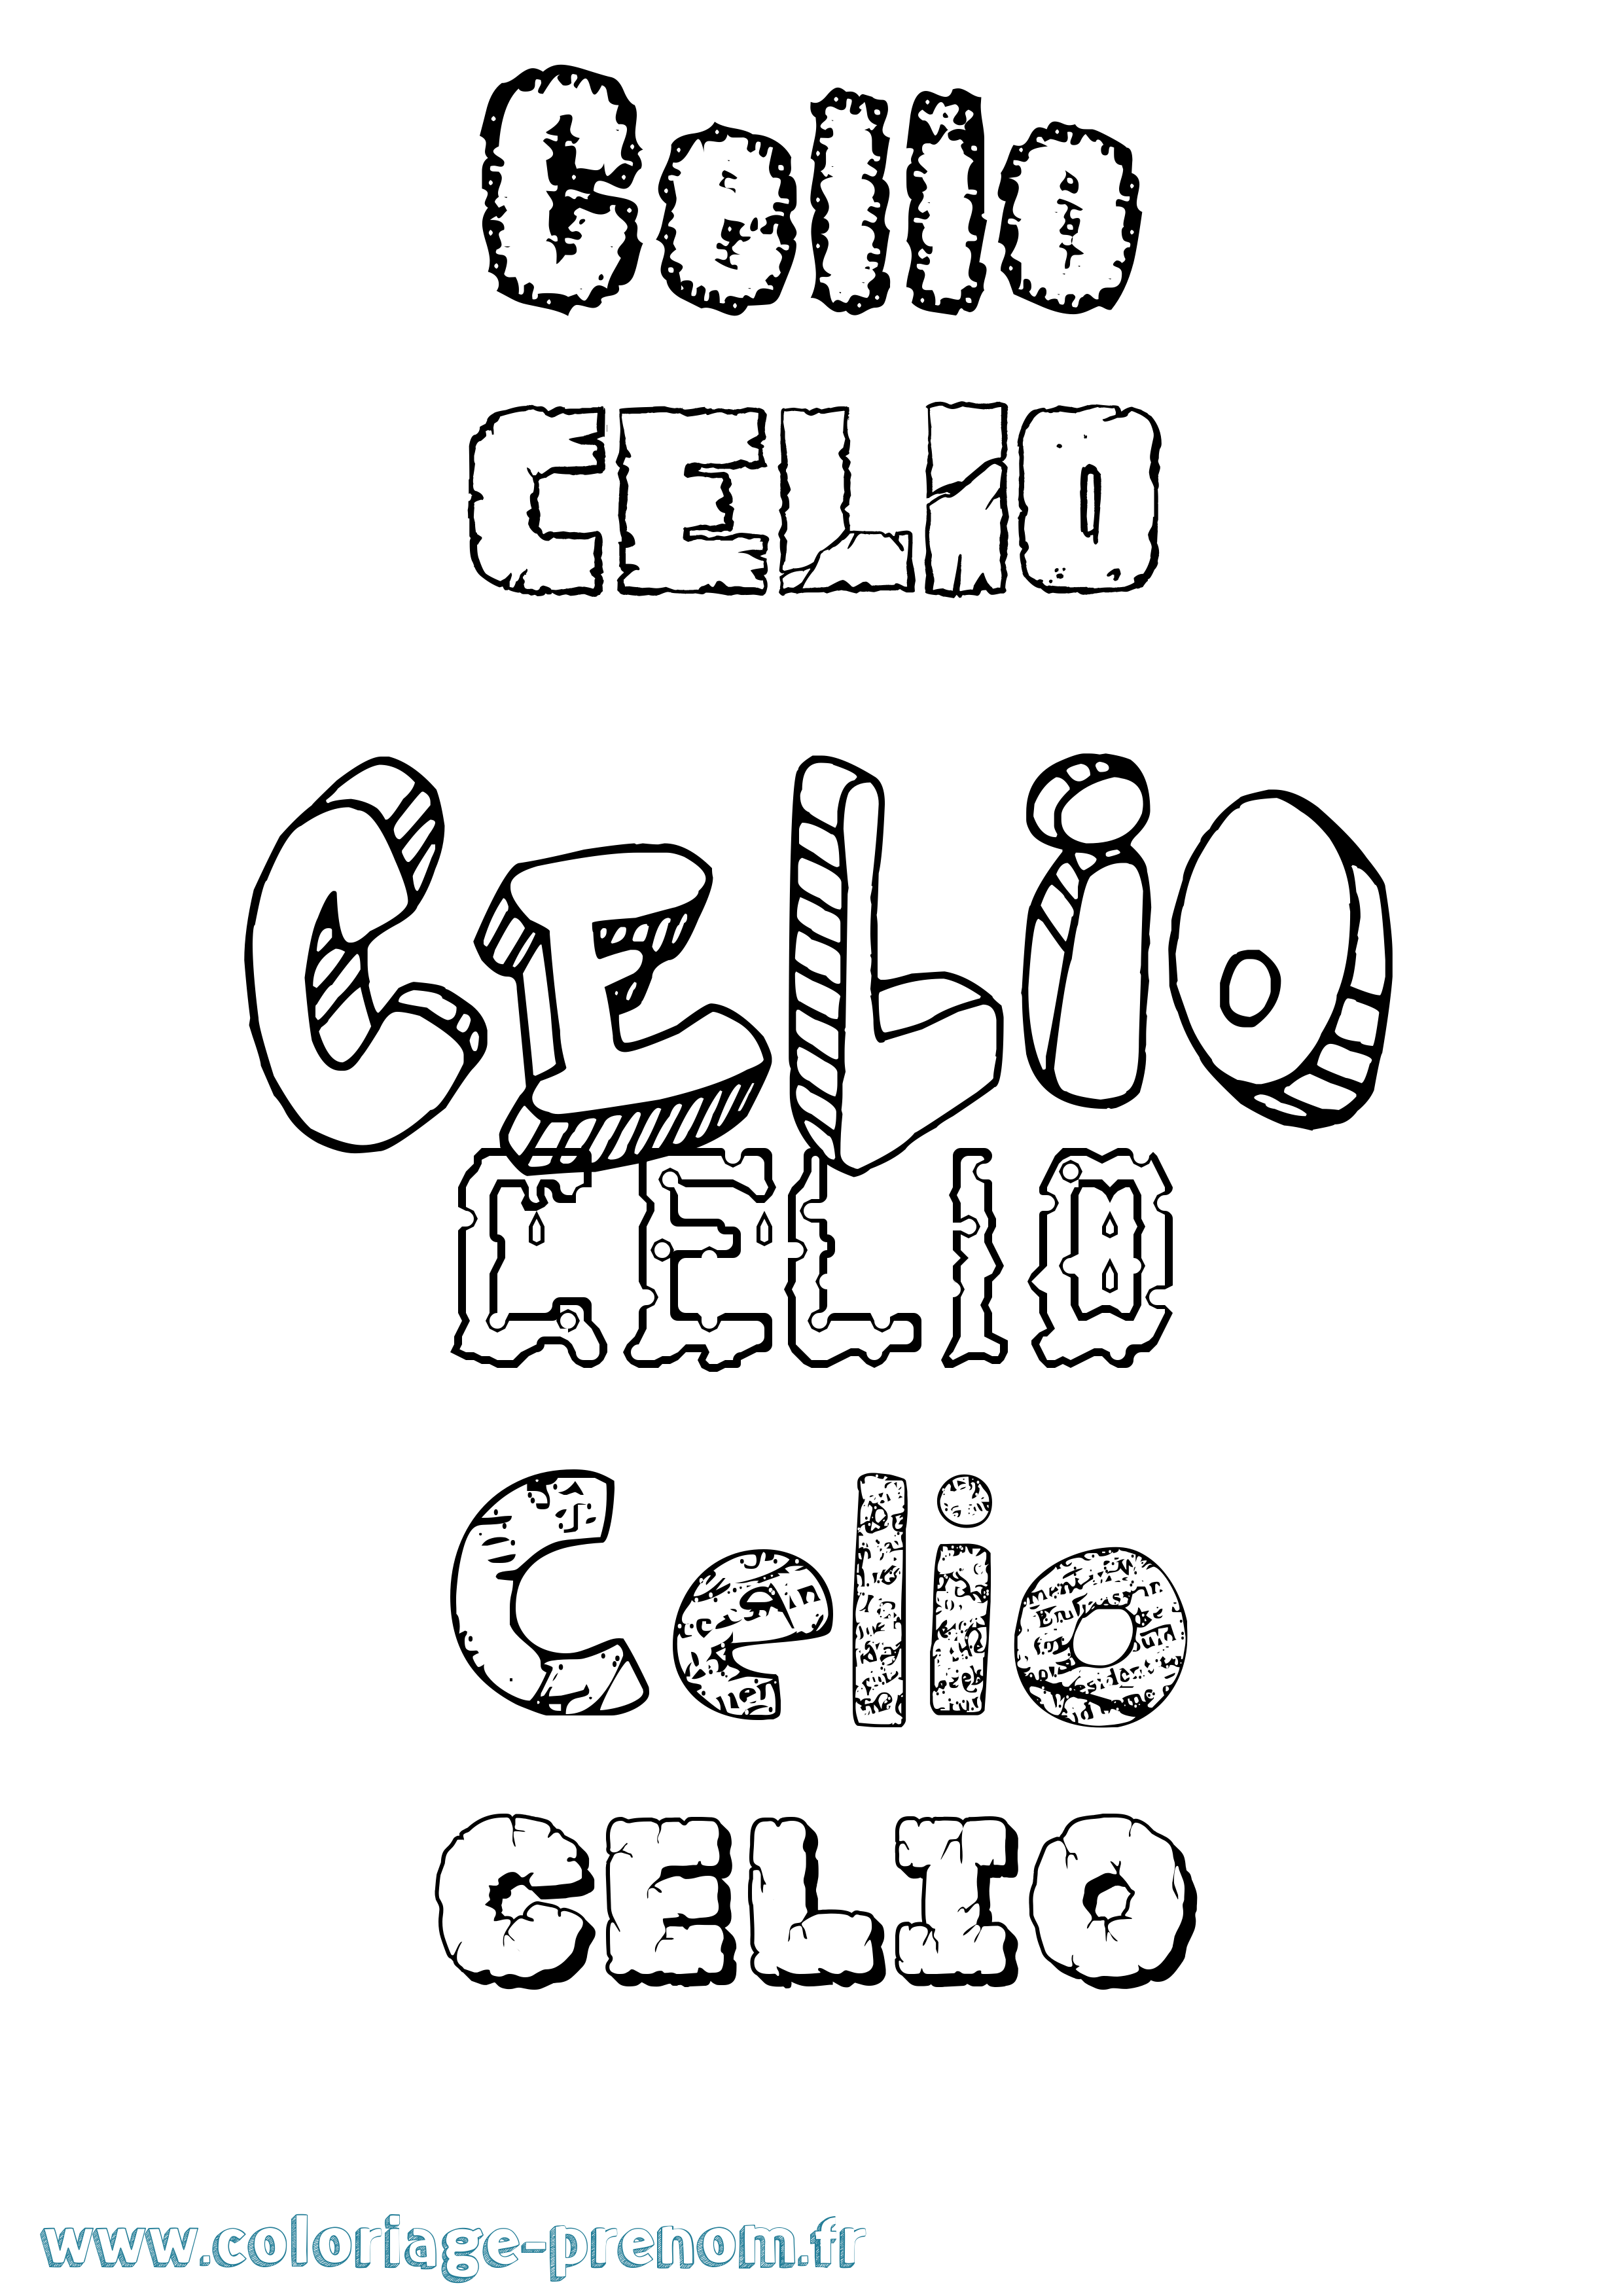 Coloriage prénom Celio Destructuré